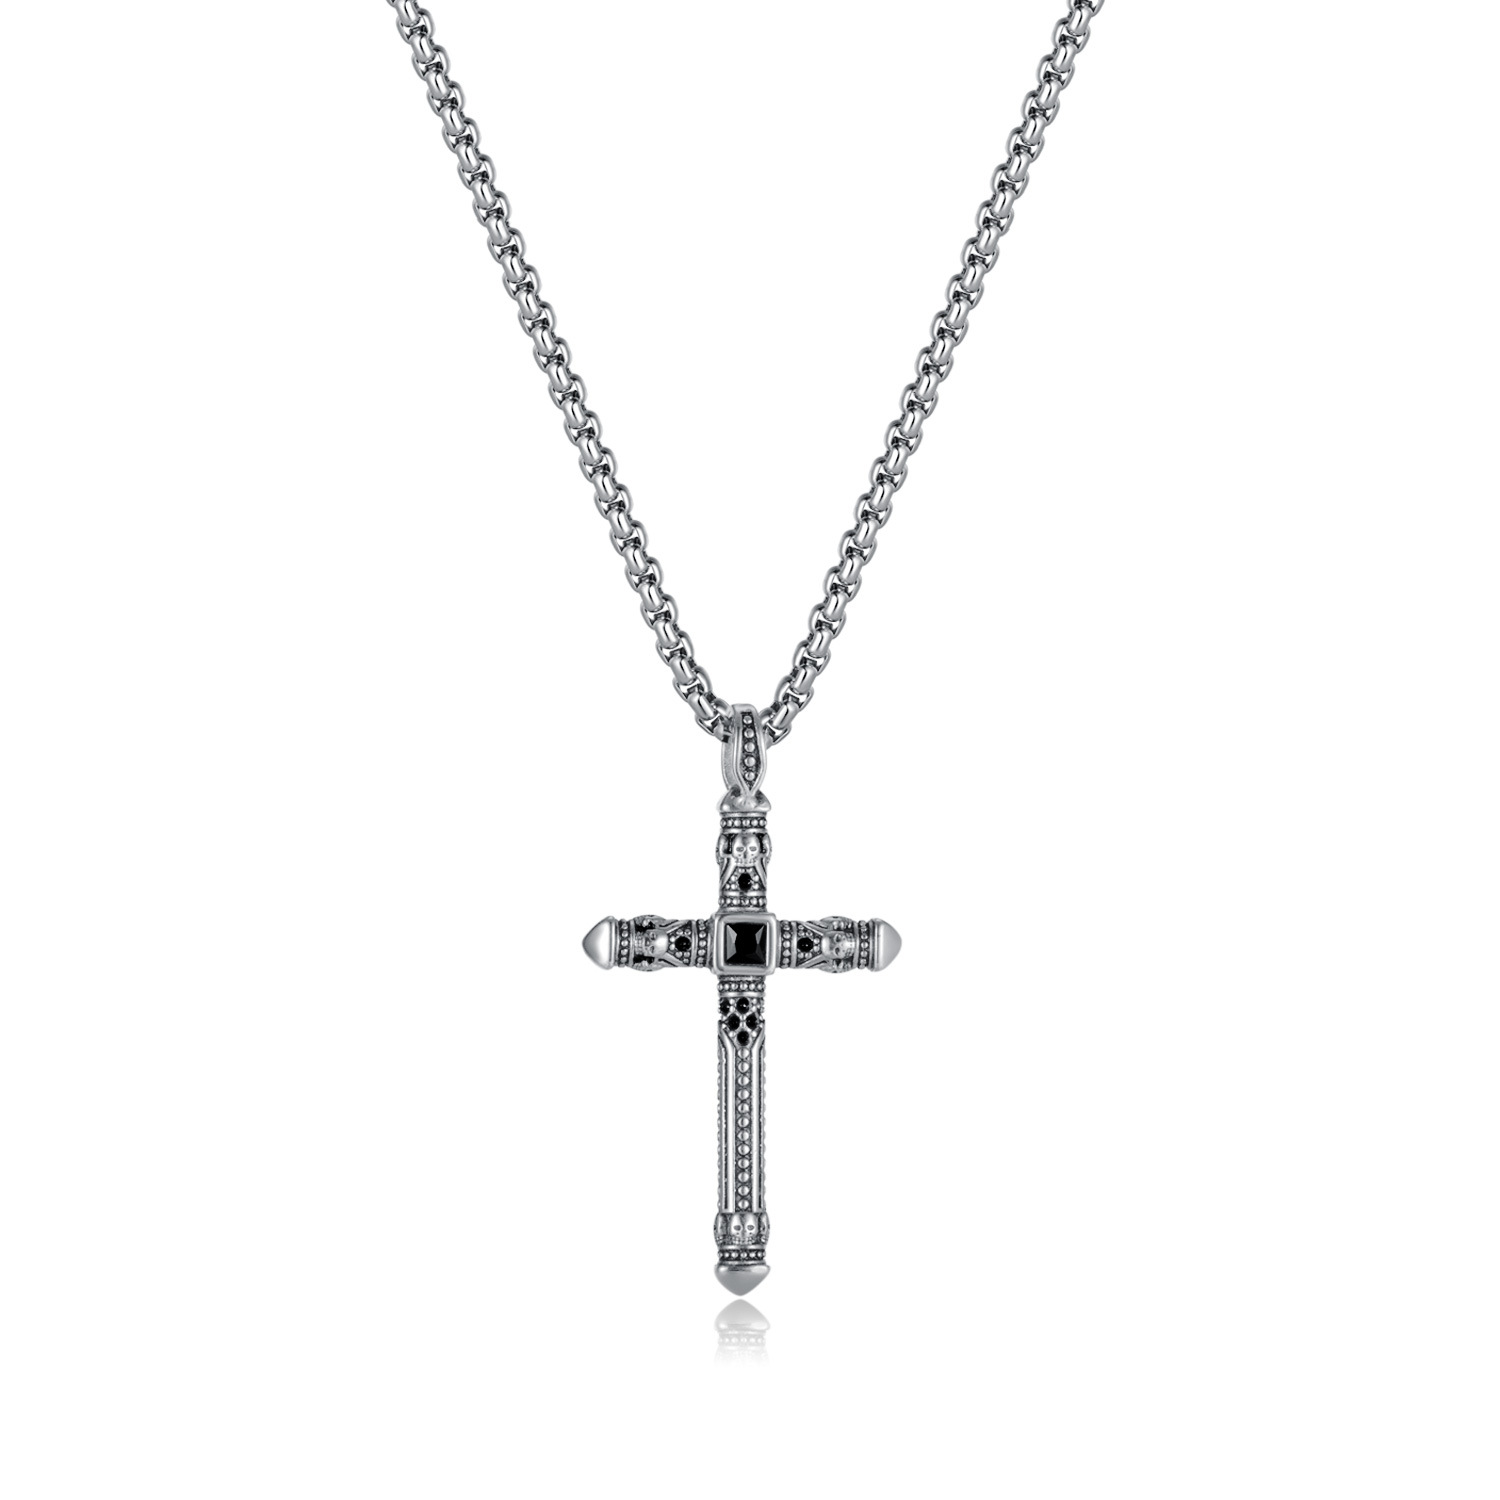 Classic cross pendant necklace